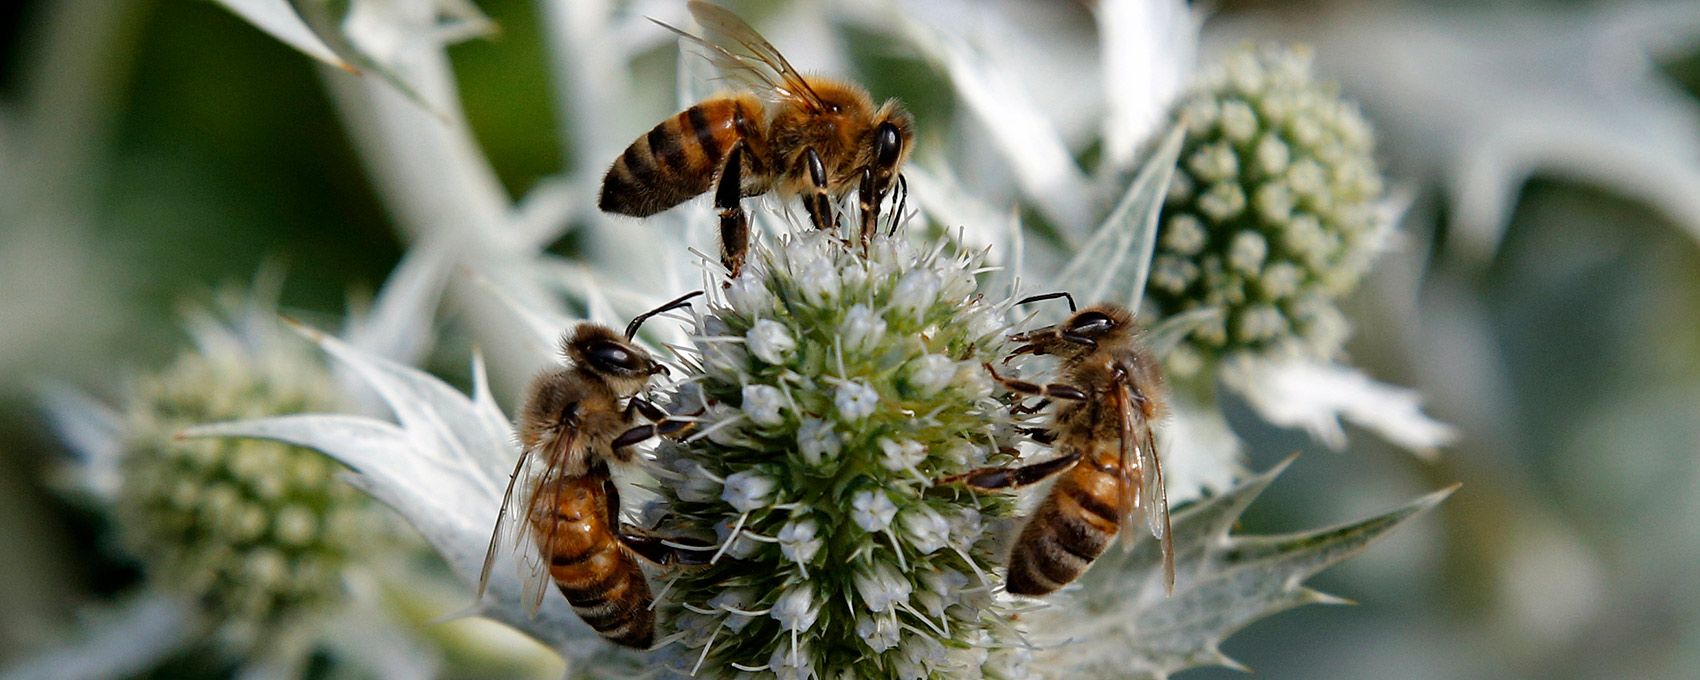 The accidental beekeeper | Aeon